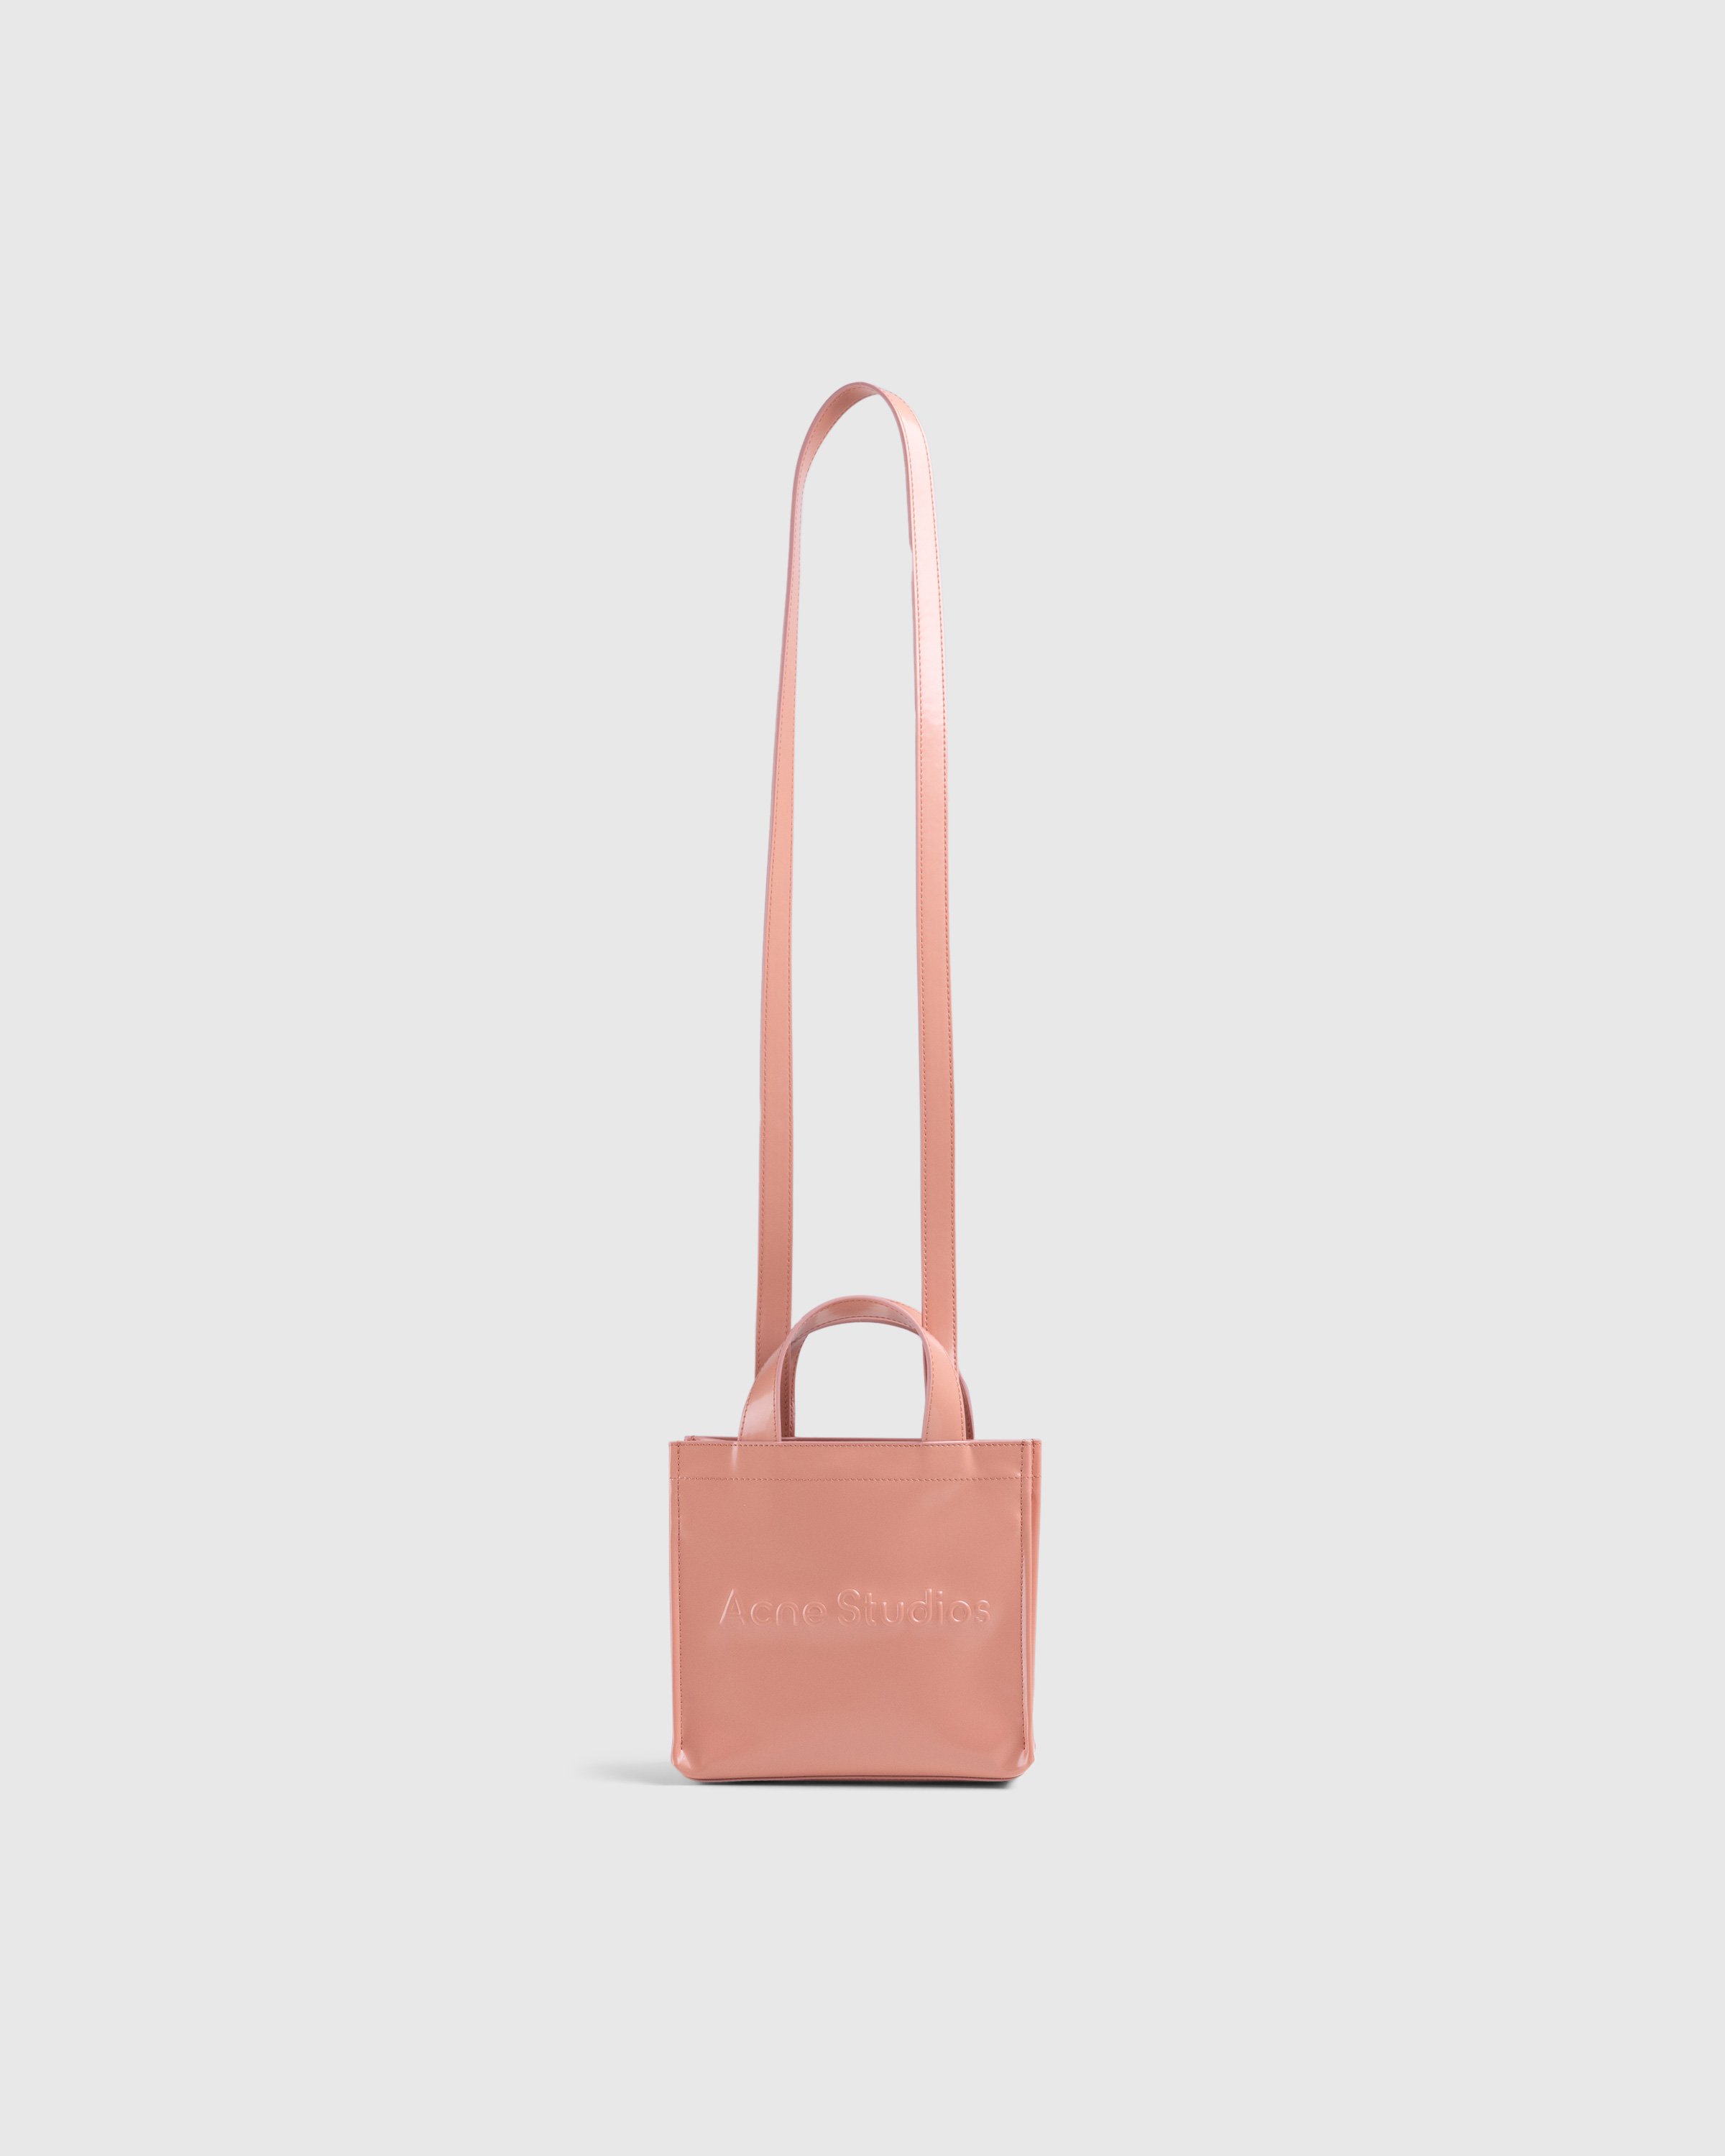 Acne Studios - Logo Shopper Mini - Accessories - Pink - Image 1